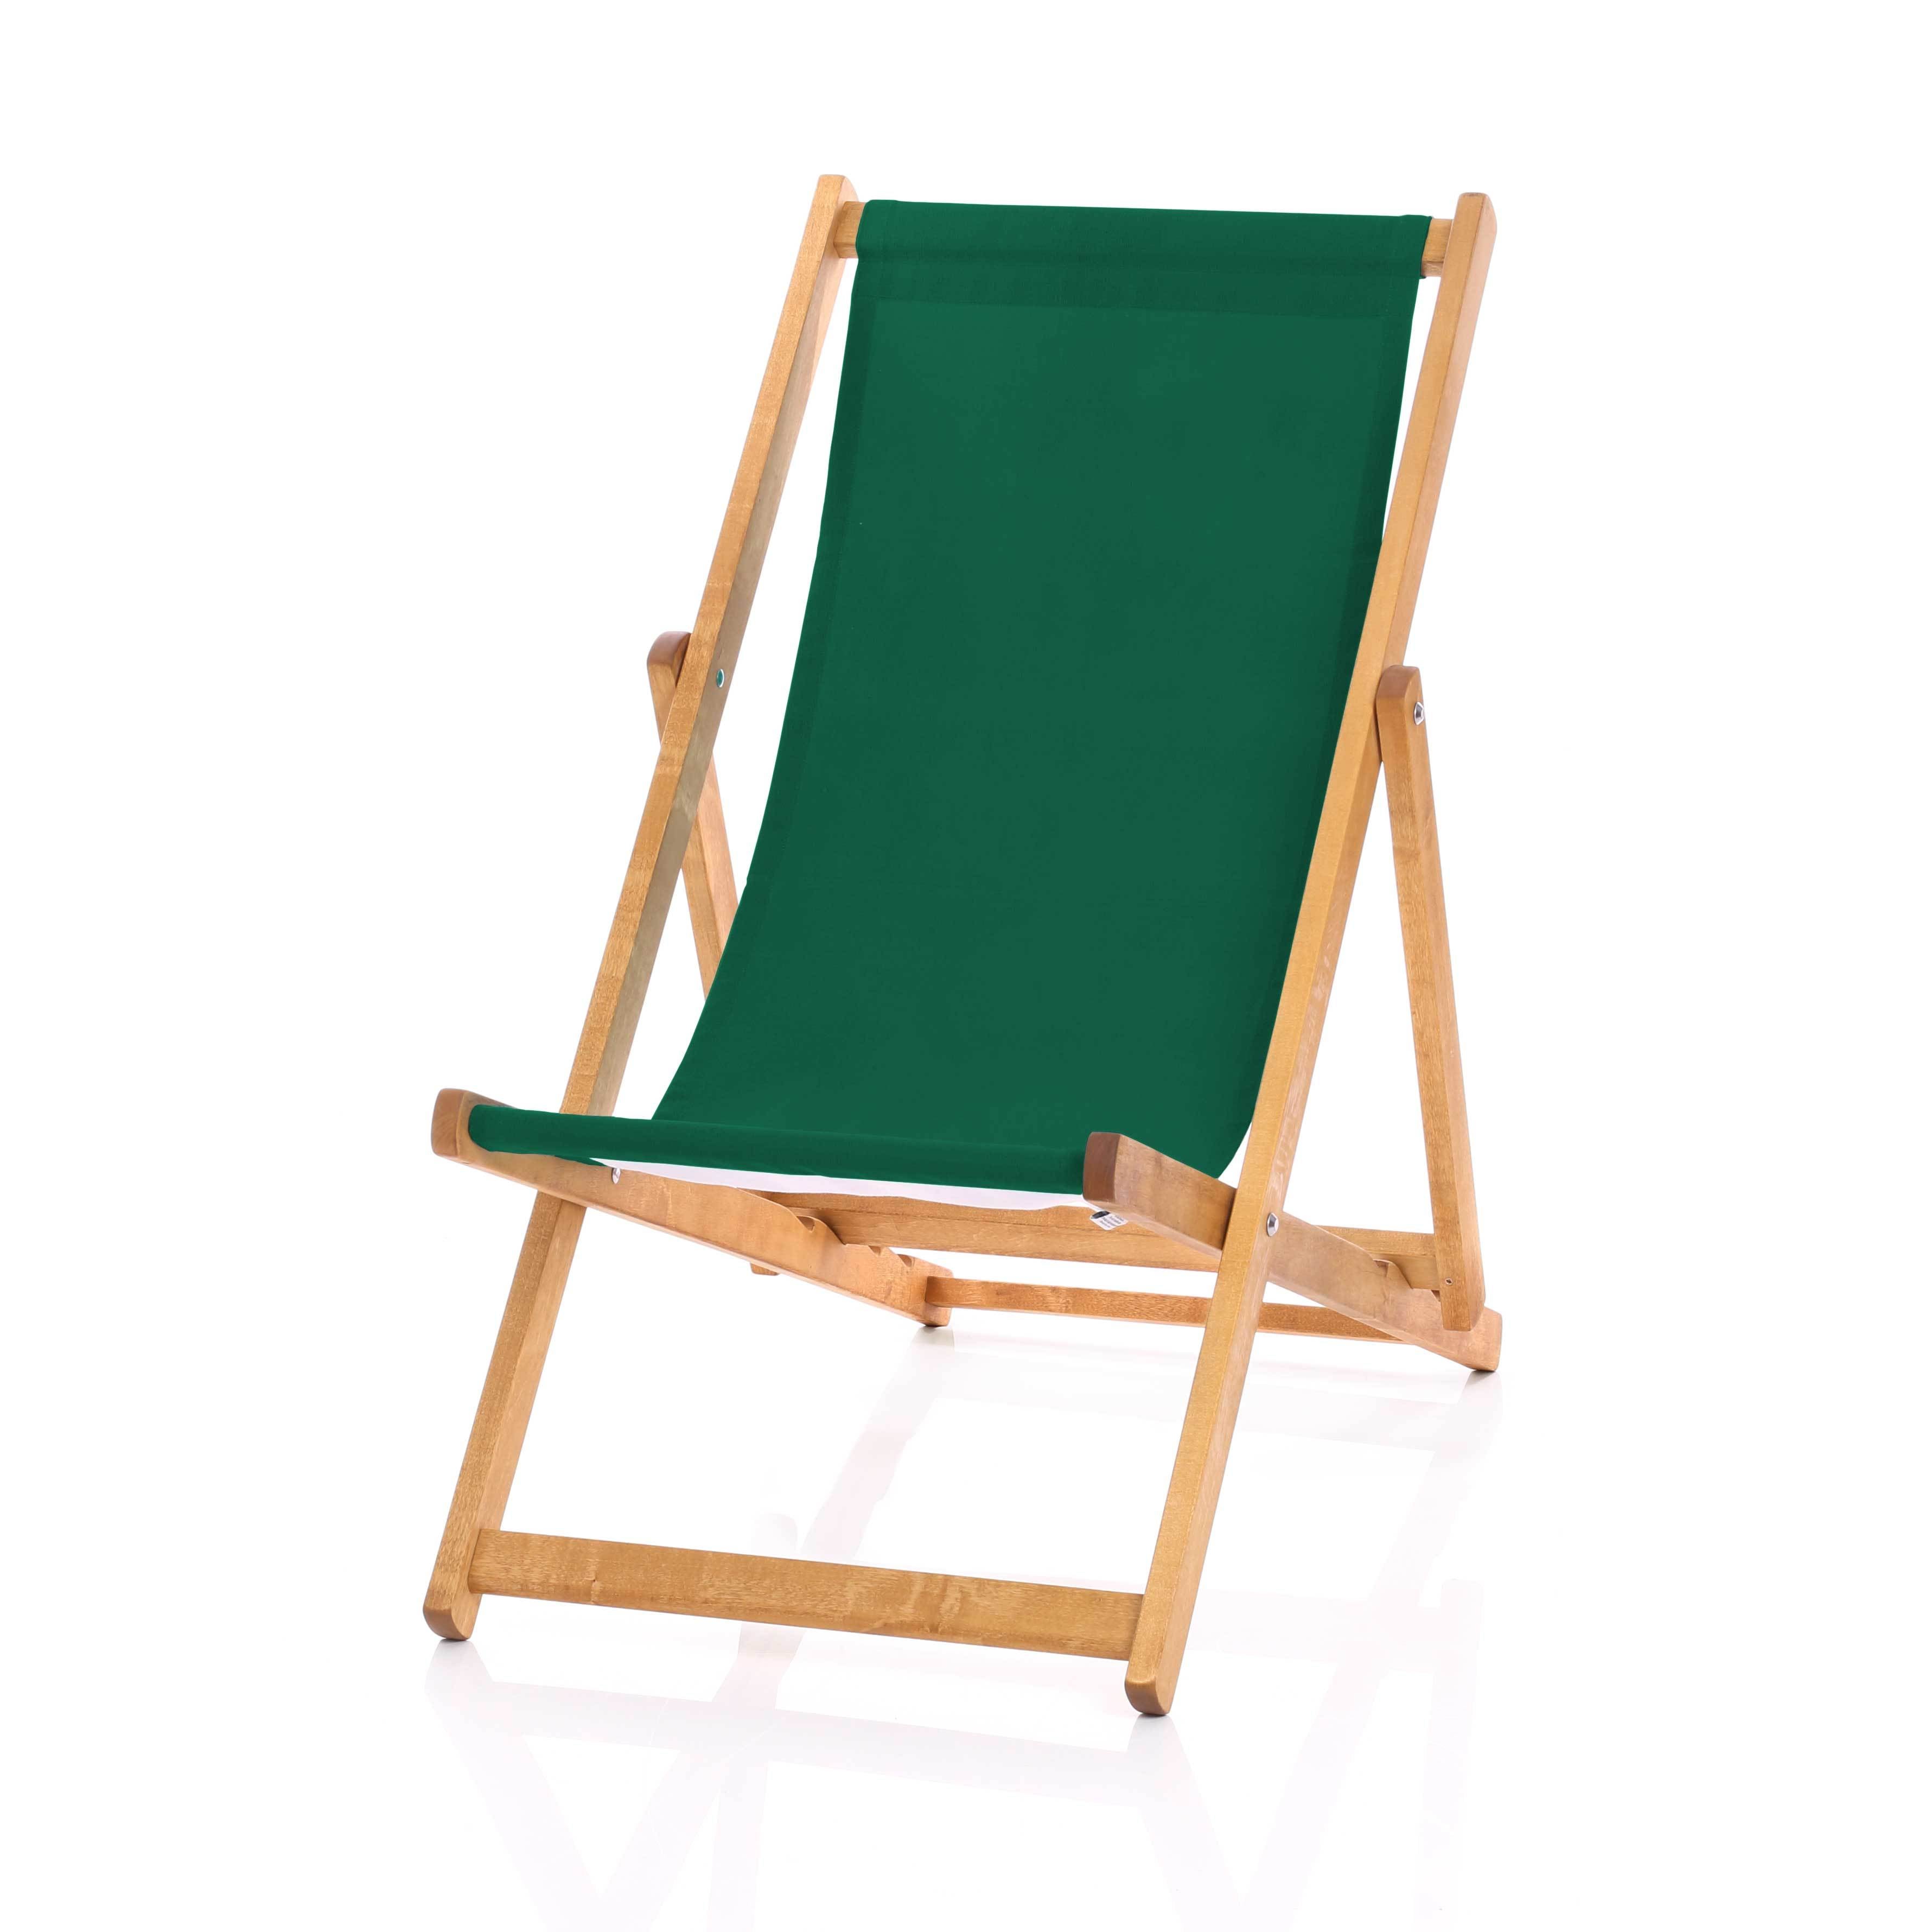 Hardwood Deckchair - Plain Green